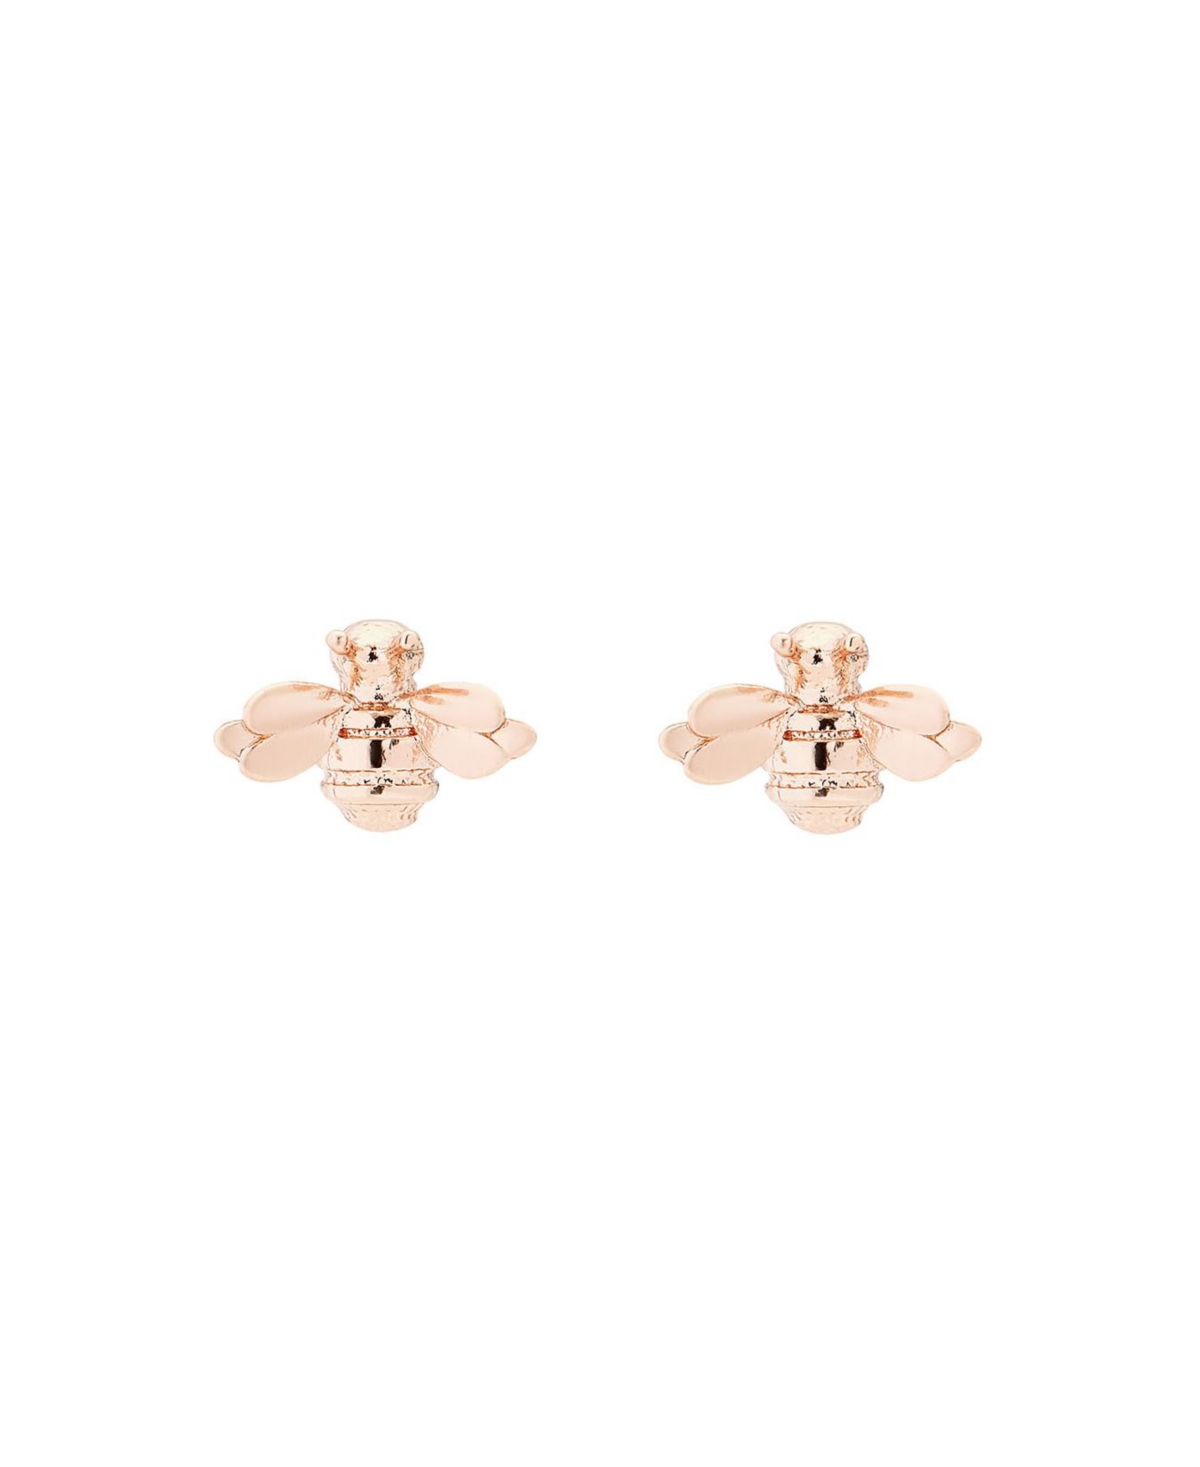 Beelii: Bumble Bee Earrings For Women - Rose gold